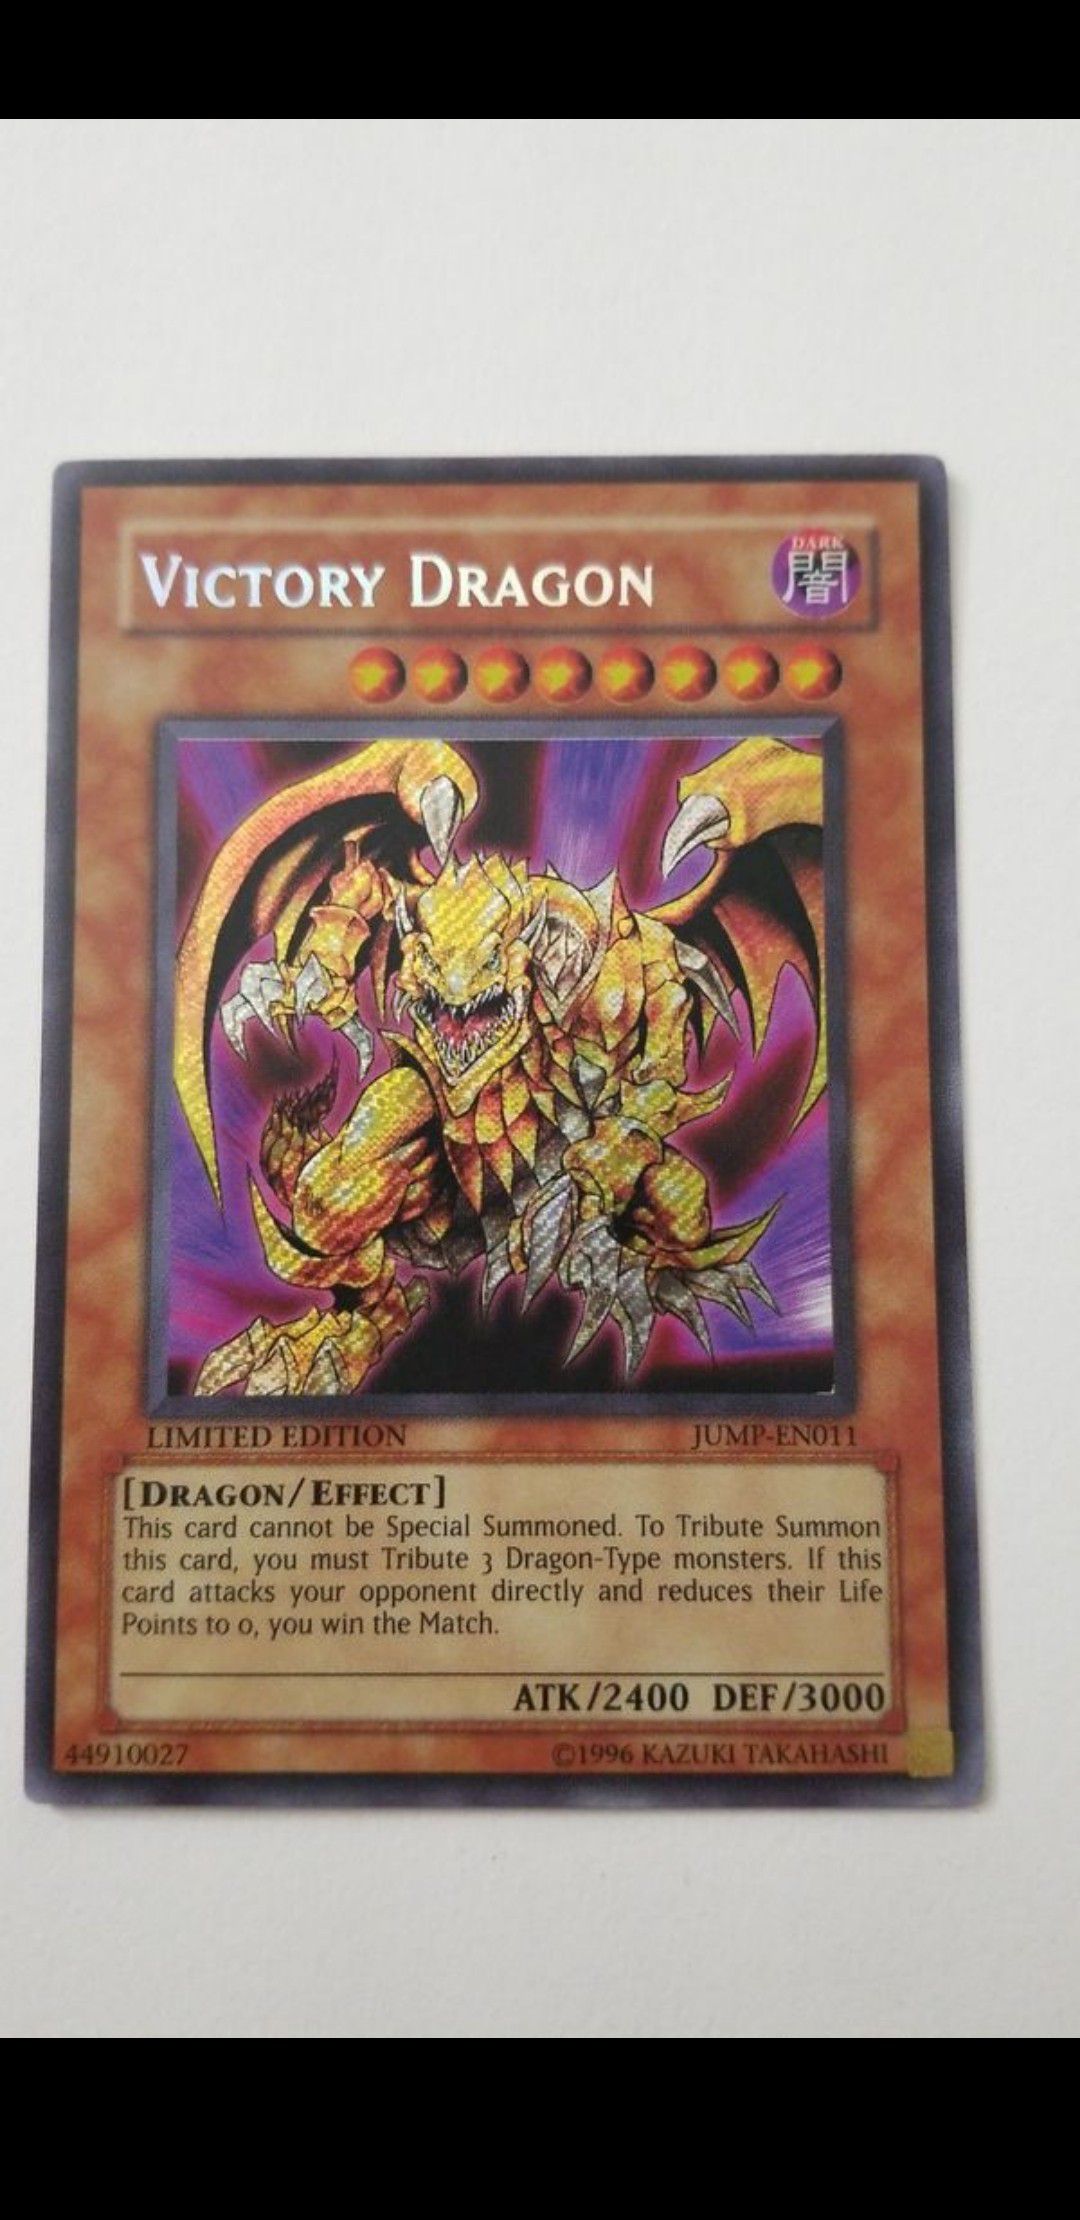 YUGIOH - Victory Dragon - Secret Rare / Limited Edition - NEAR MINT CONDITION! (JUMP-EN011)